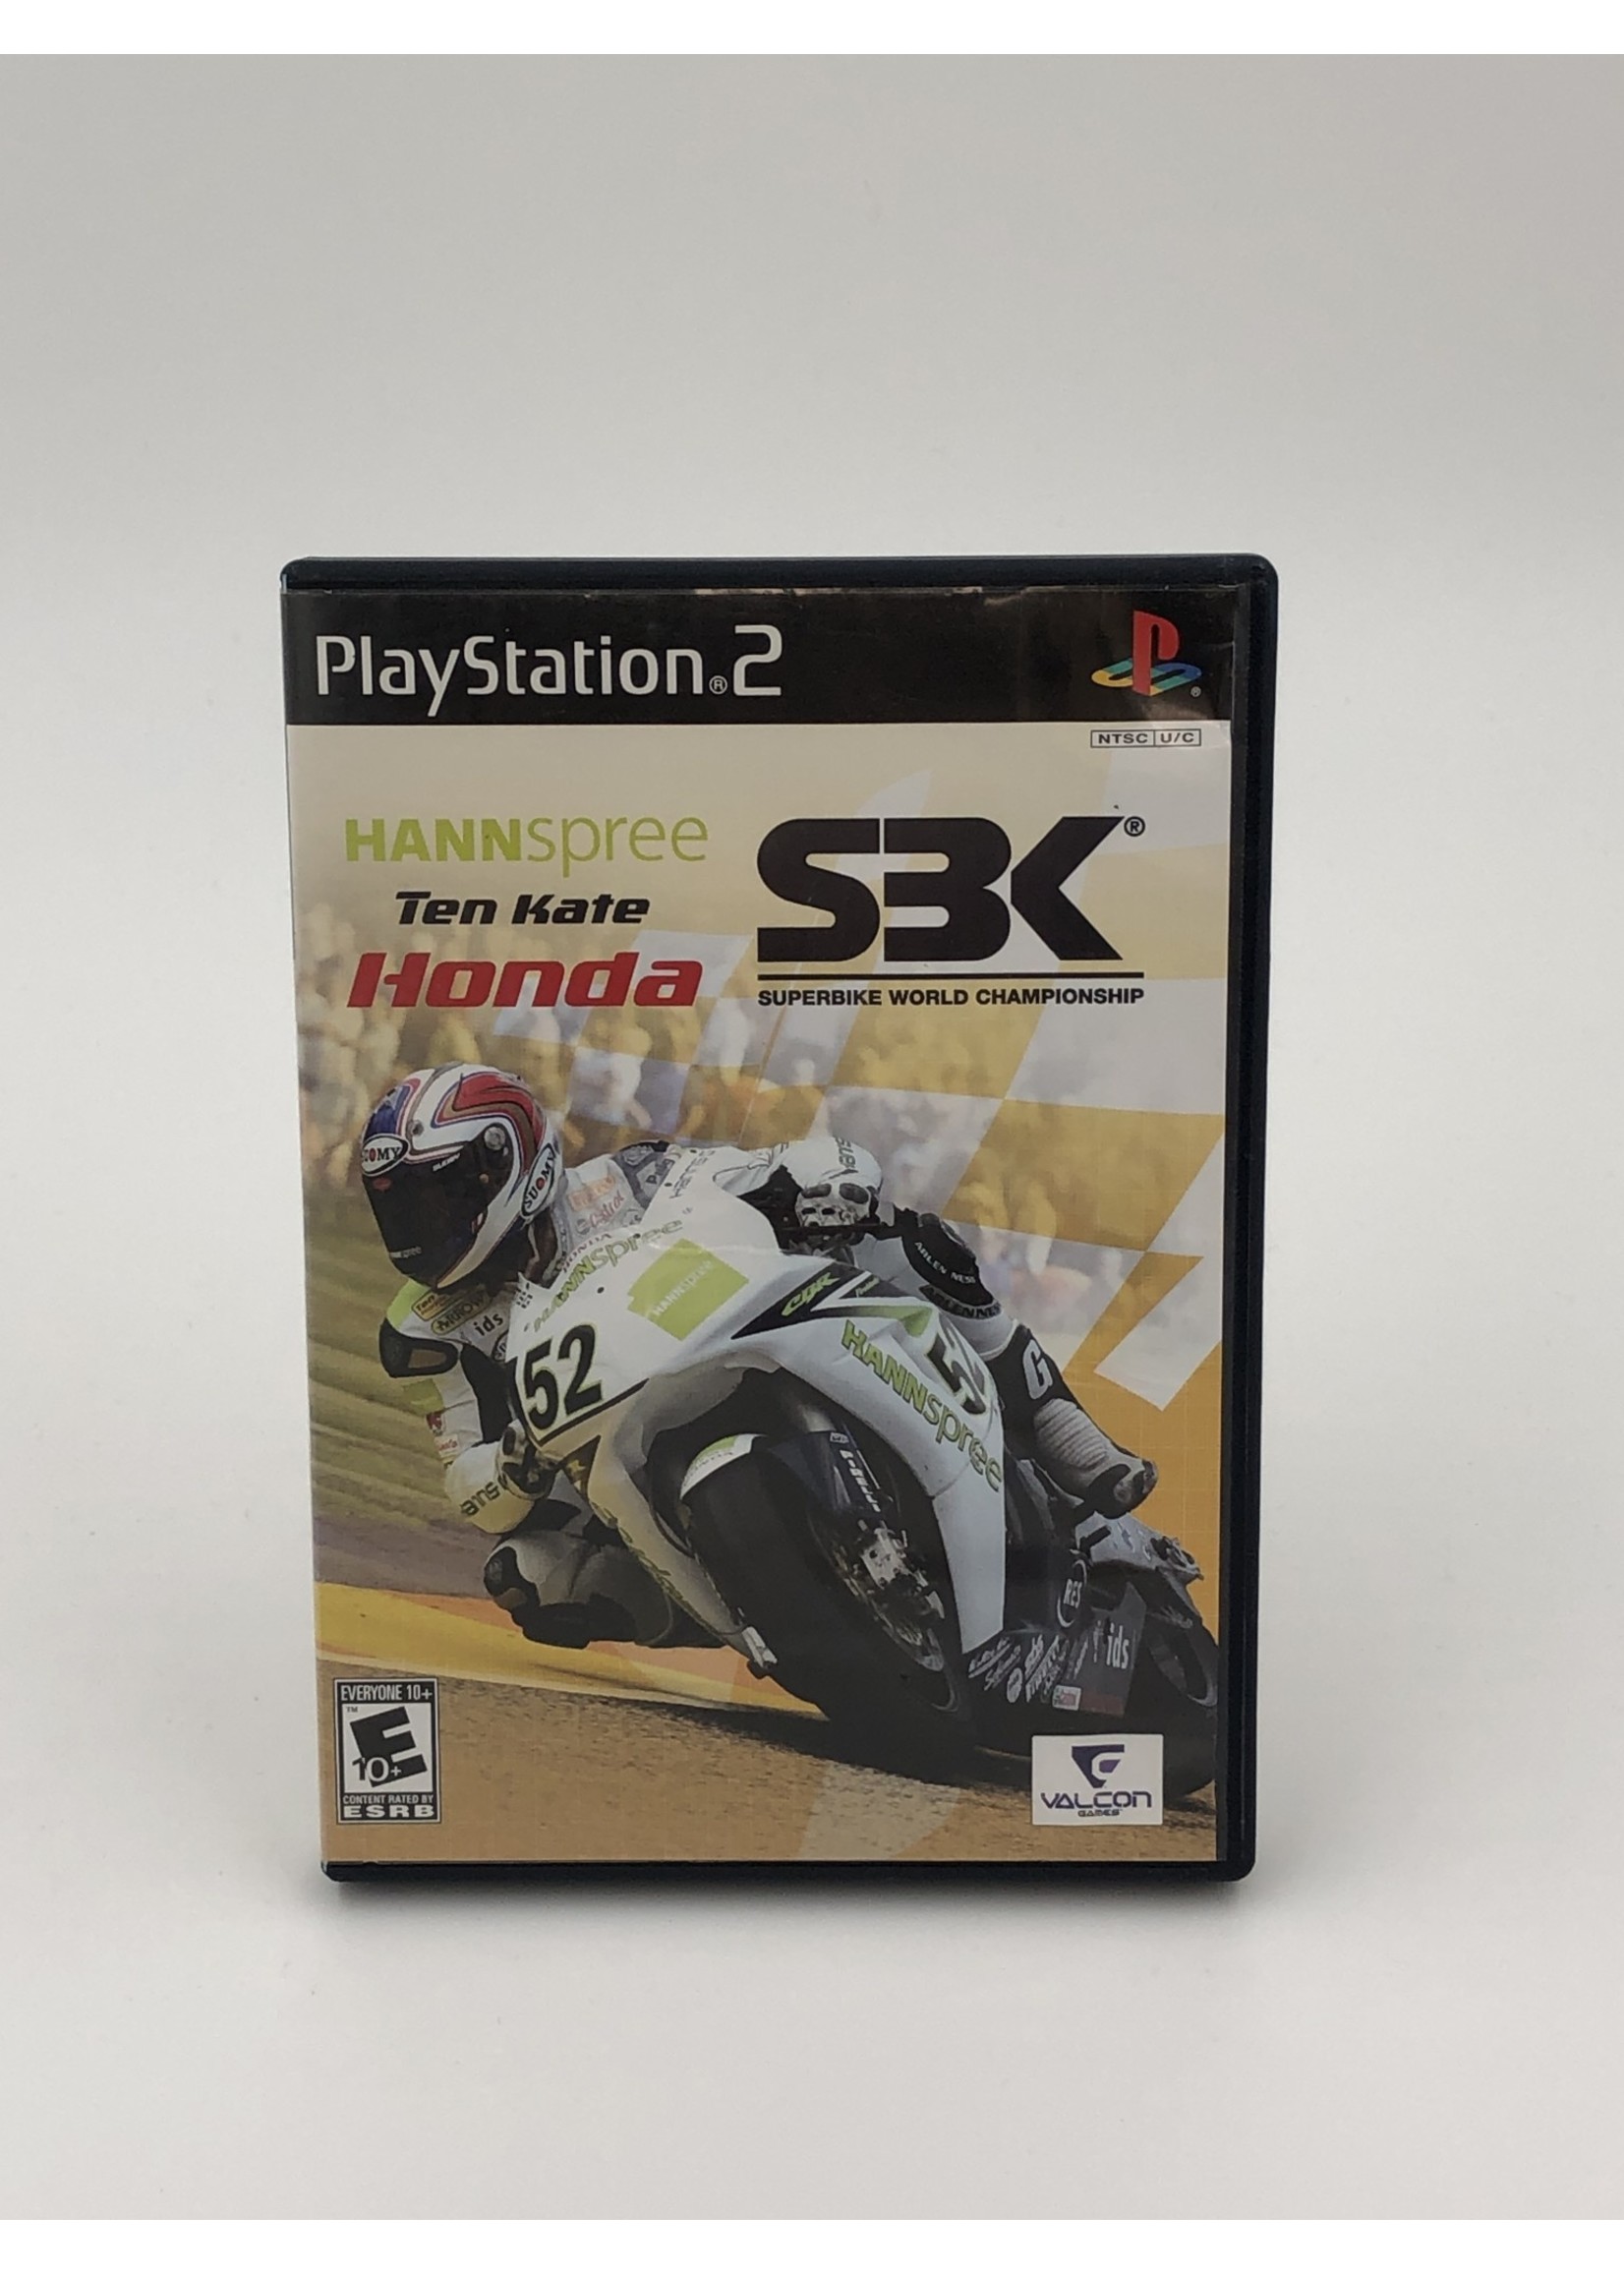 Sony   SBK: Super Bike Championship - PS2